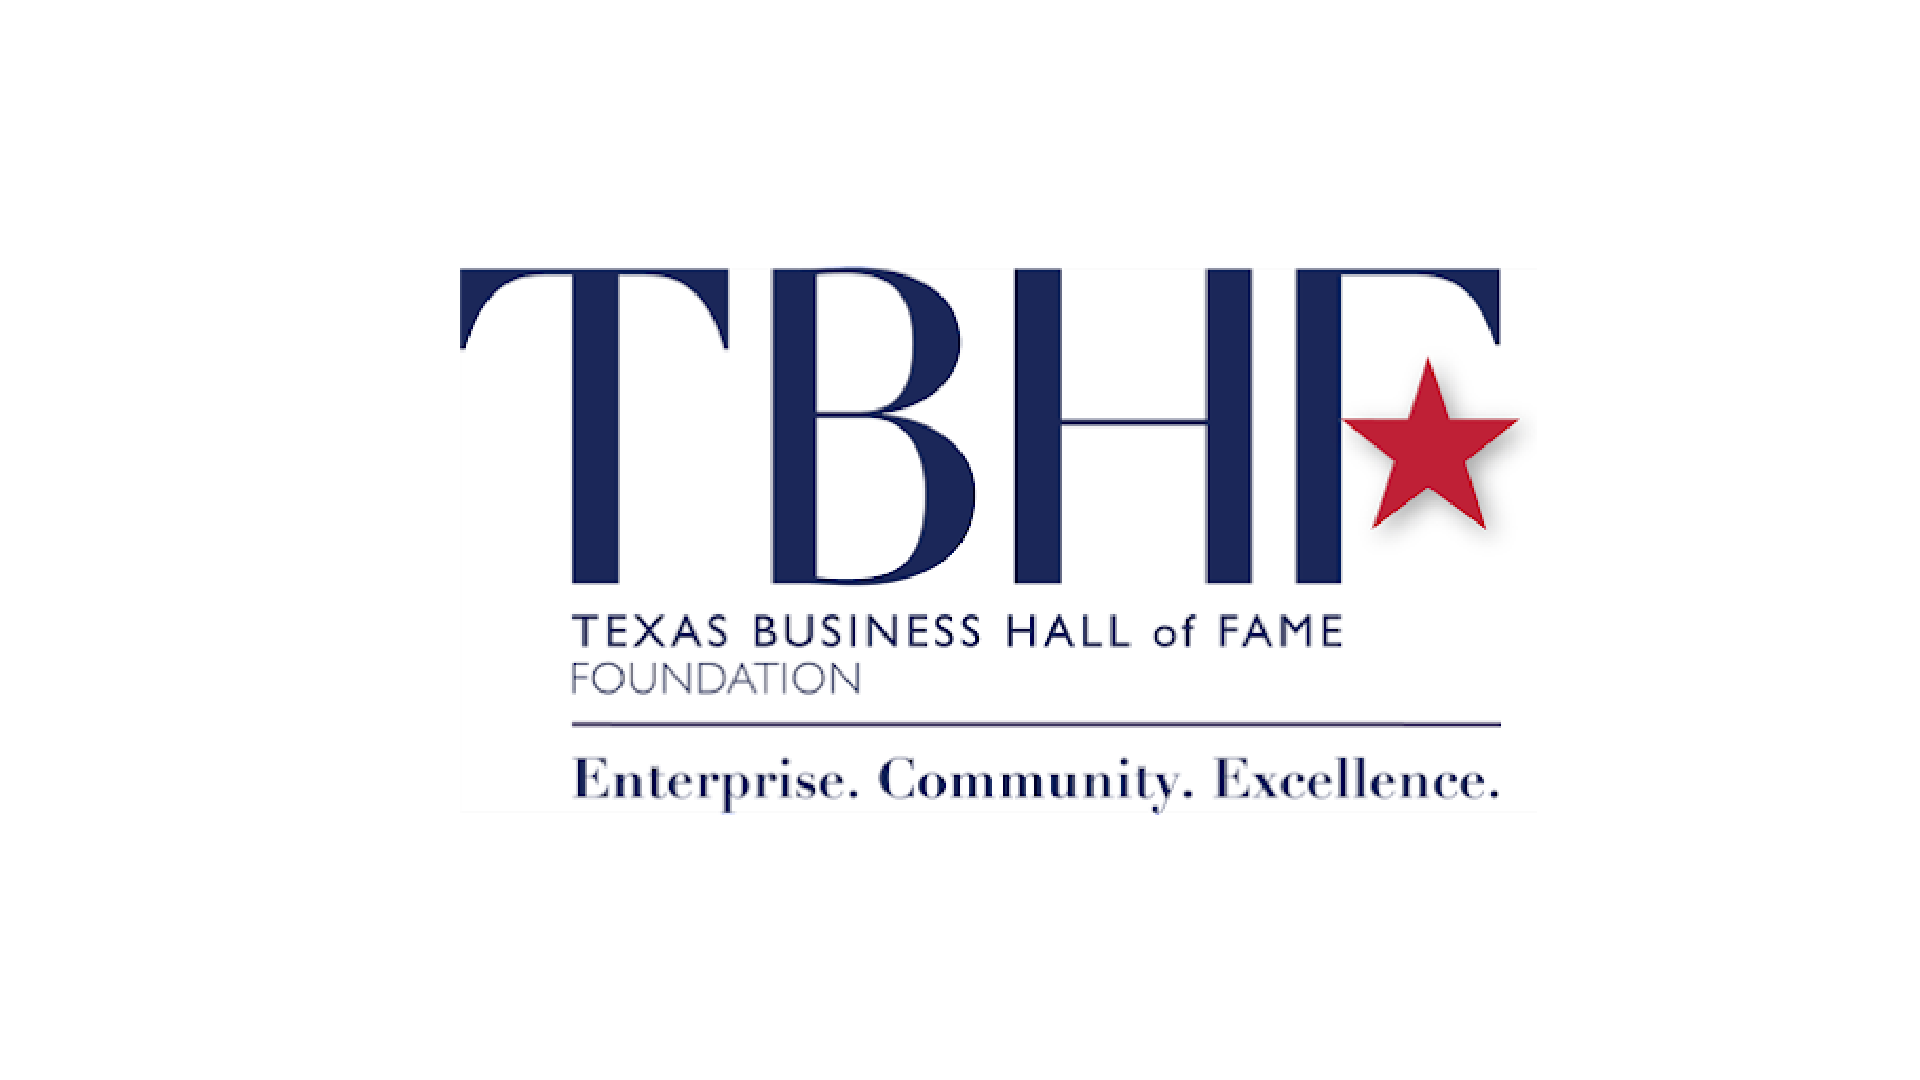 Texas Business Hall of Fame Foundation logo